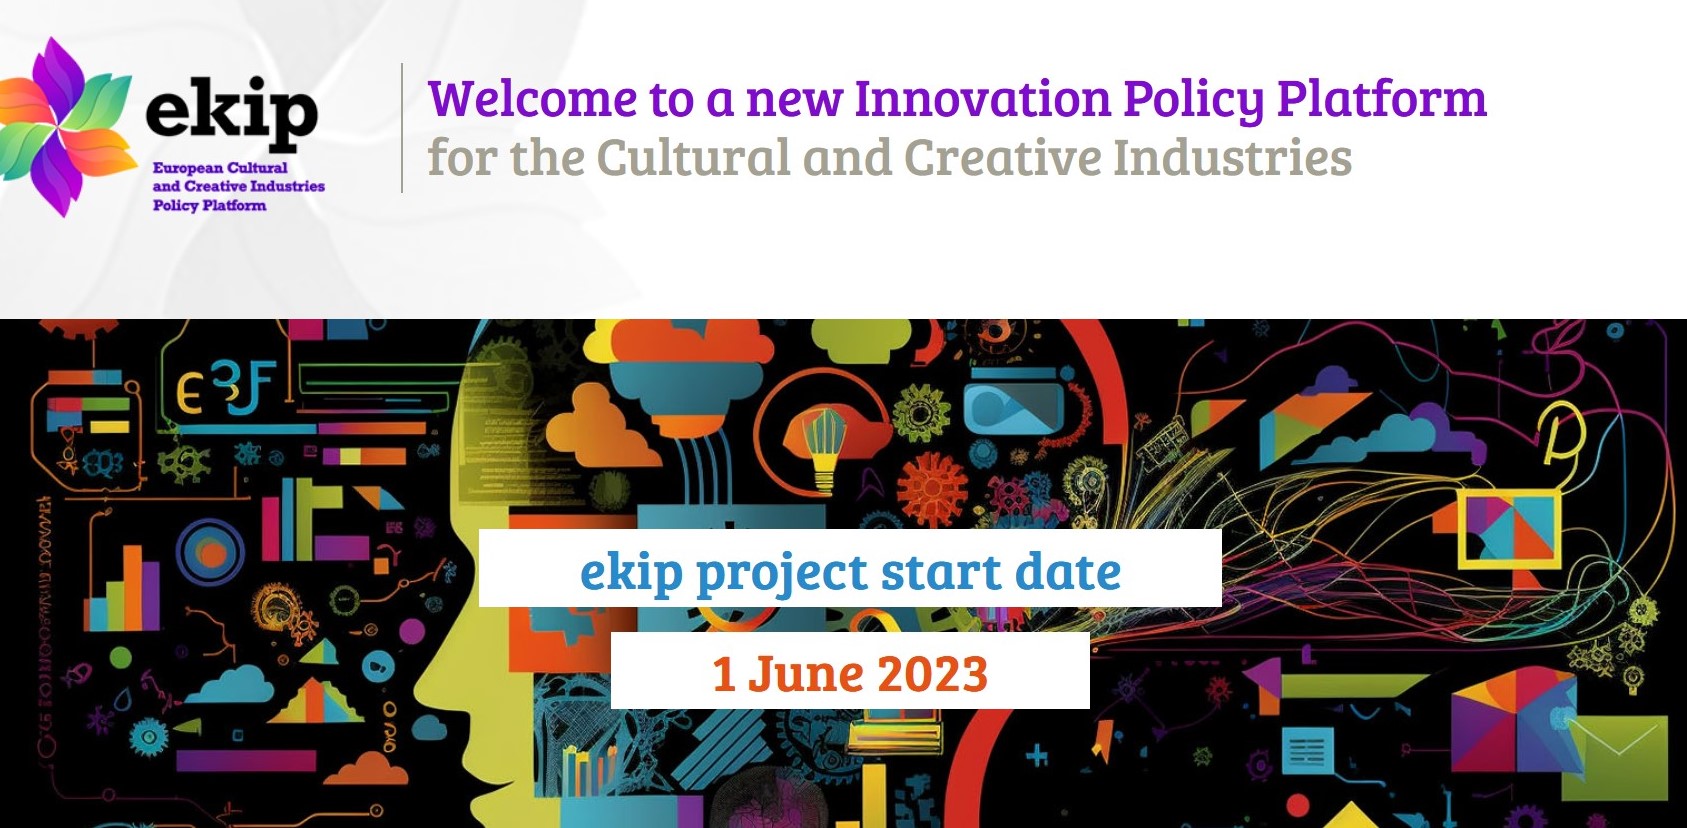 Kuvassa ekip-hankkeen verkkosivujen etusivu, jossa teksti: "Welcome to a new Innovation Policy Platform for the Cultural and Creative Industries. ekip Project start date 1 June 2023."